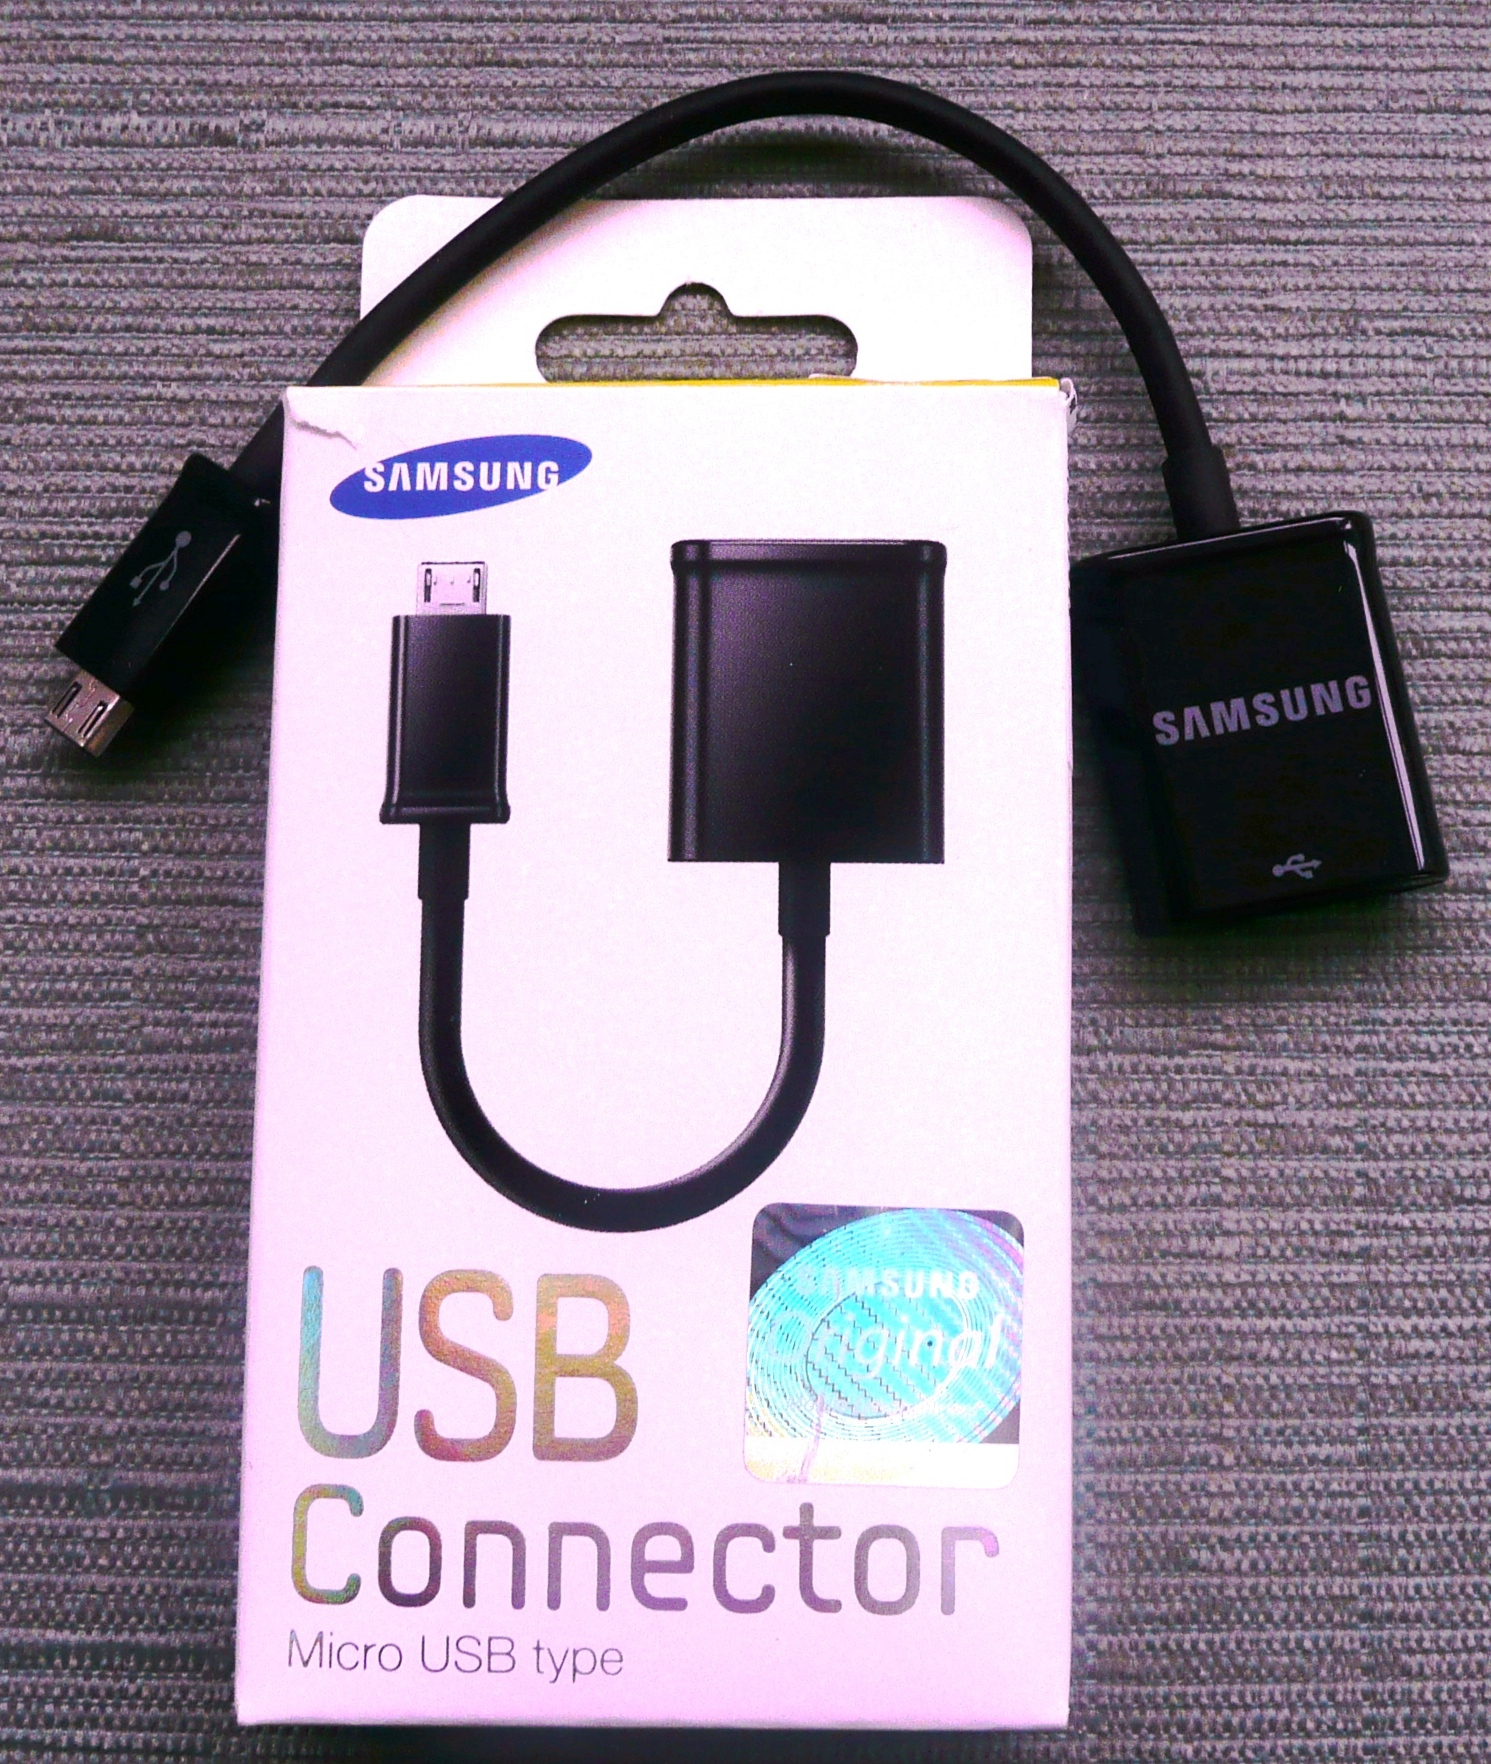 Samsung Galaxy USB Connector - Coolsmartphone - 1491 x 1764 jpeg 1297kB